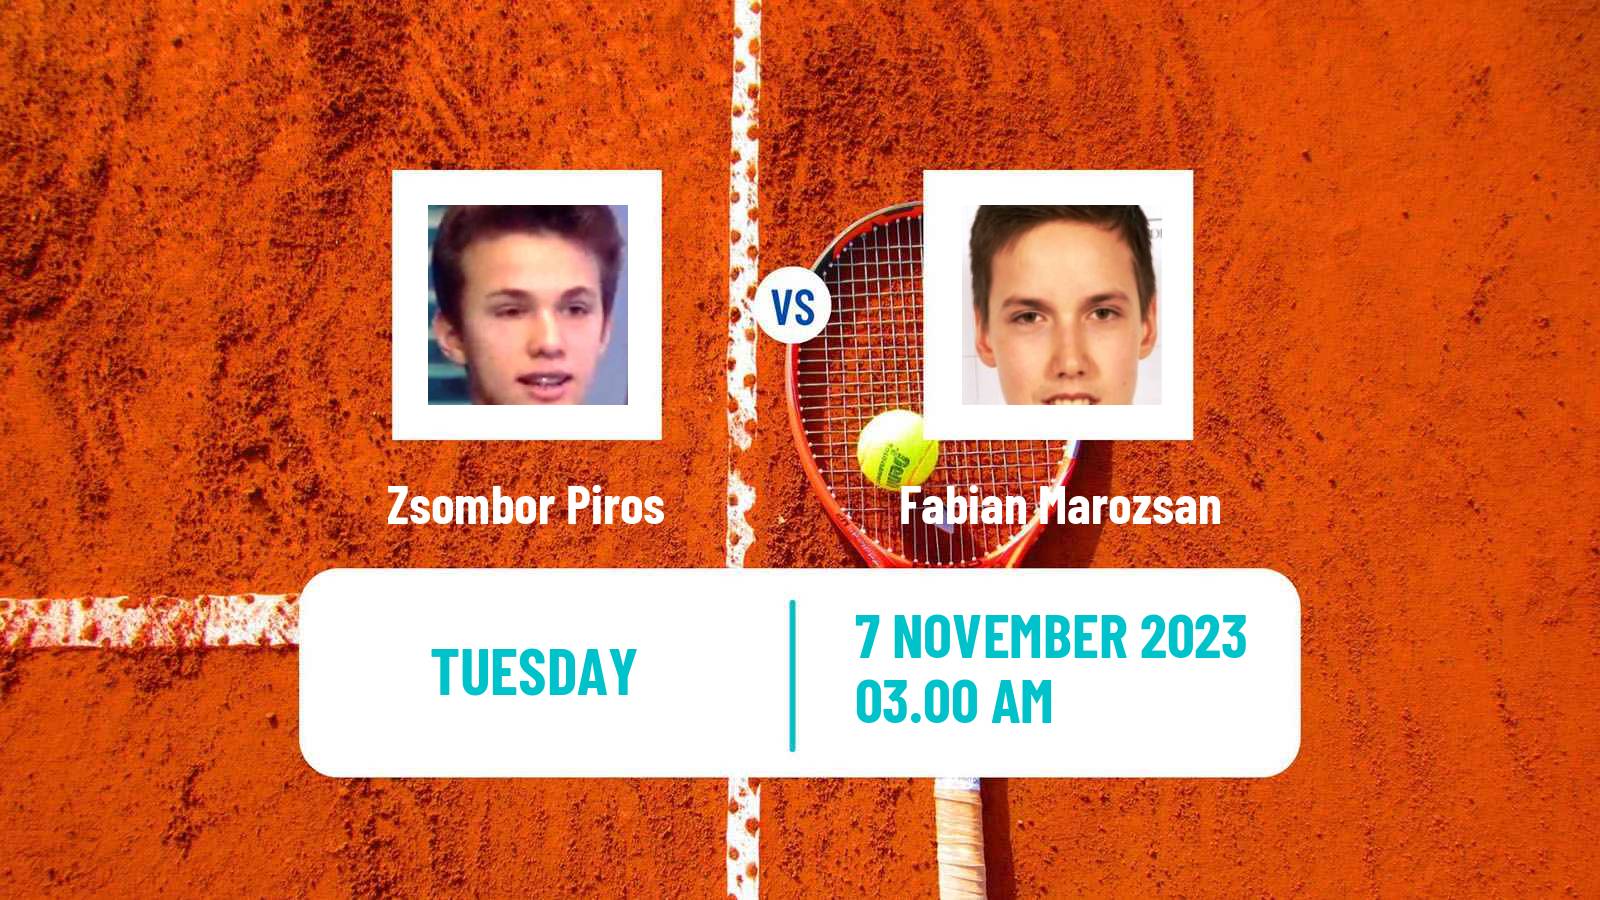 Tennis ATP Sofia Zsombor Piros - Fabian Marozsan